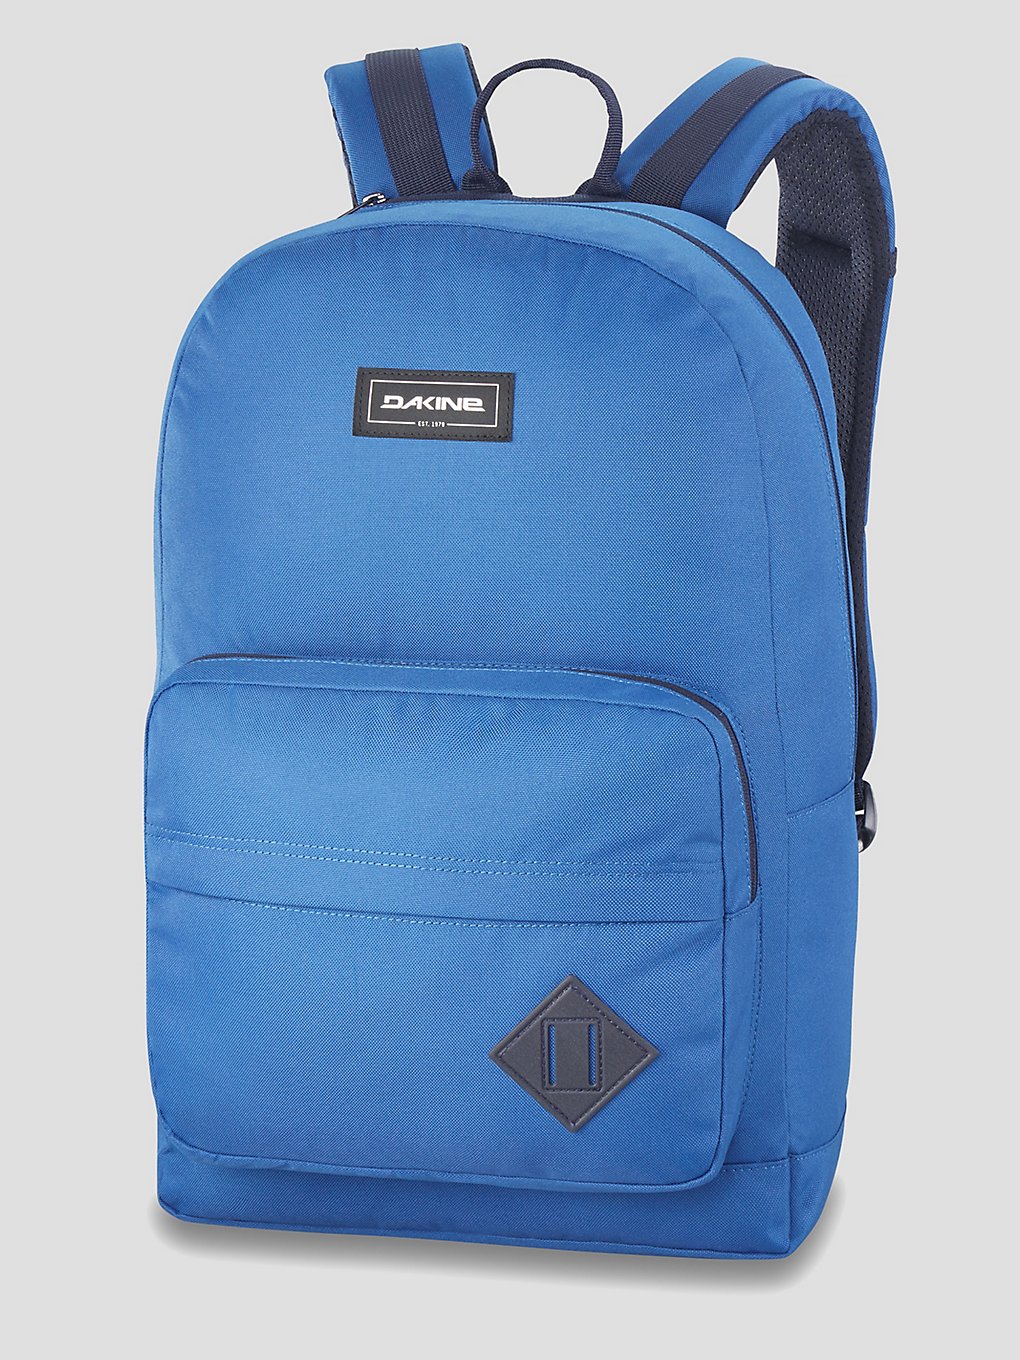 Dakine 365 30L Backpack deep blue